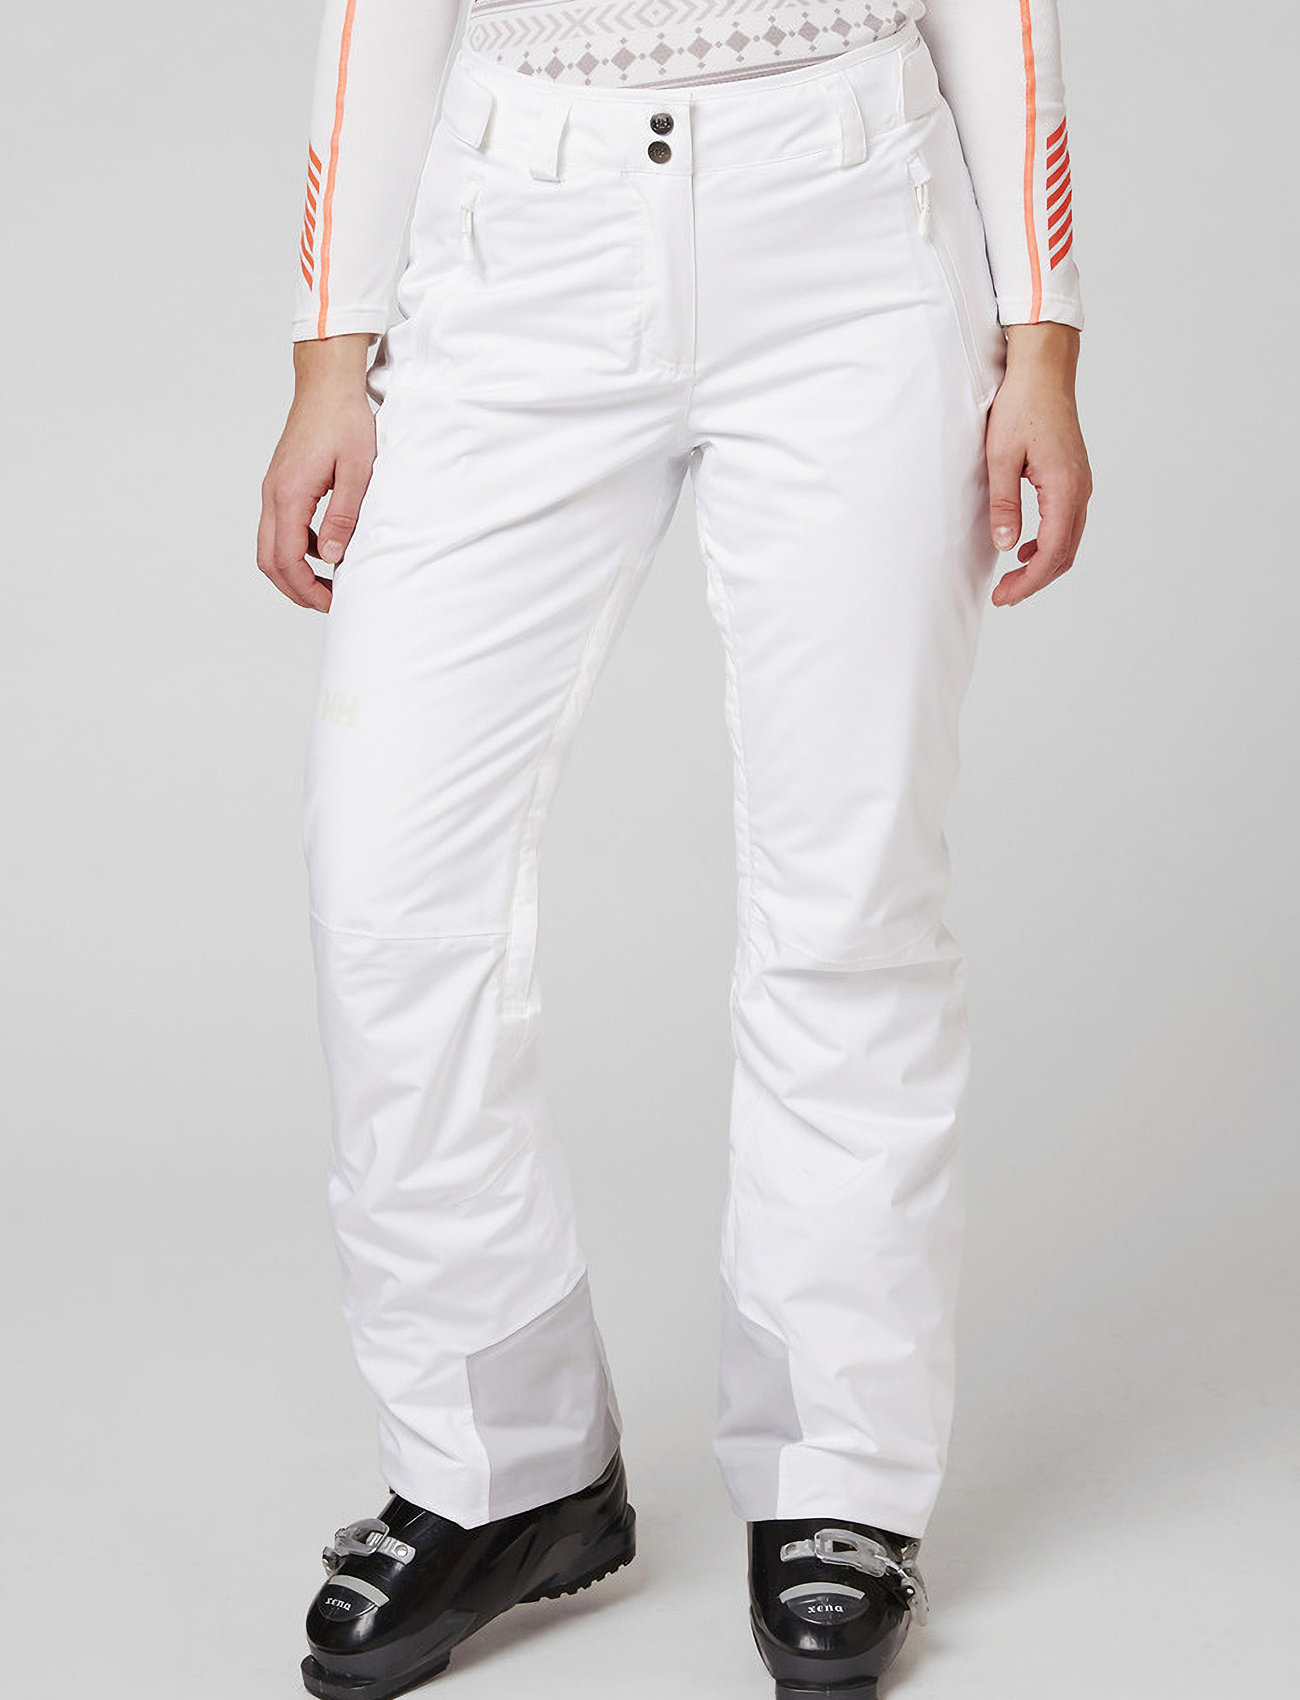 Helly Hansen - W LEGENDARY INSULATED PANT - spodnie narciarskie - white - 0